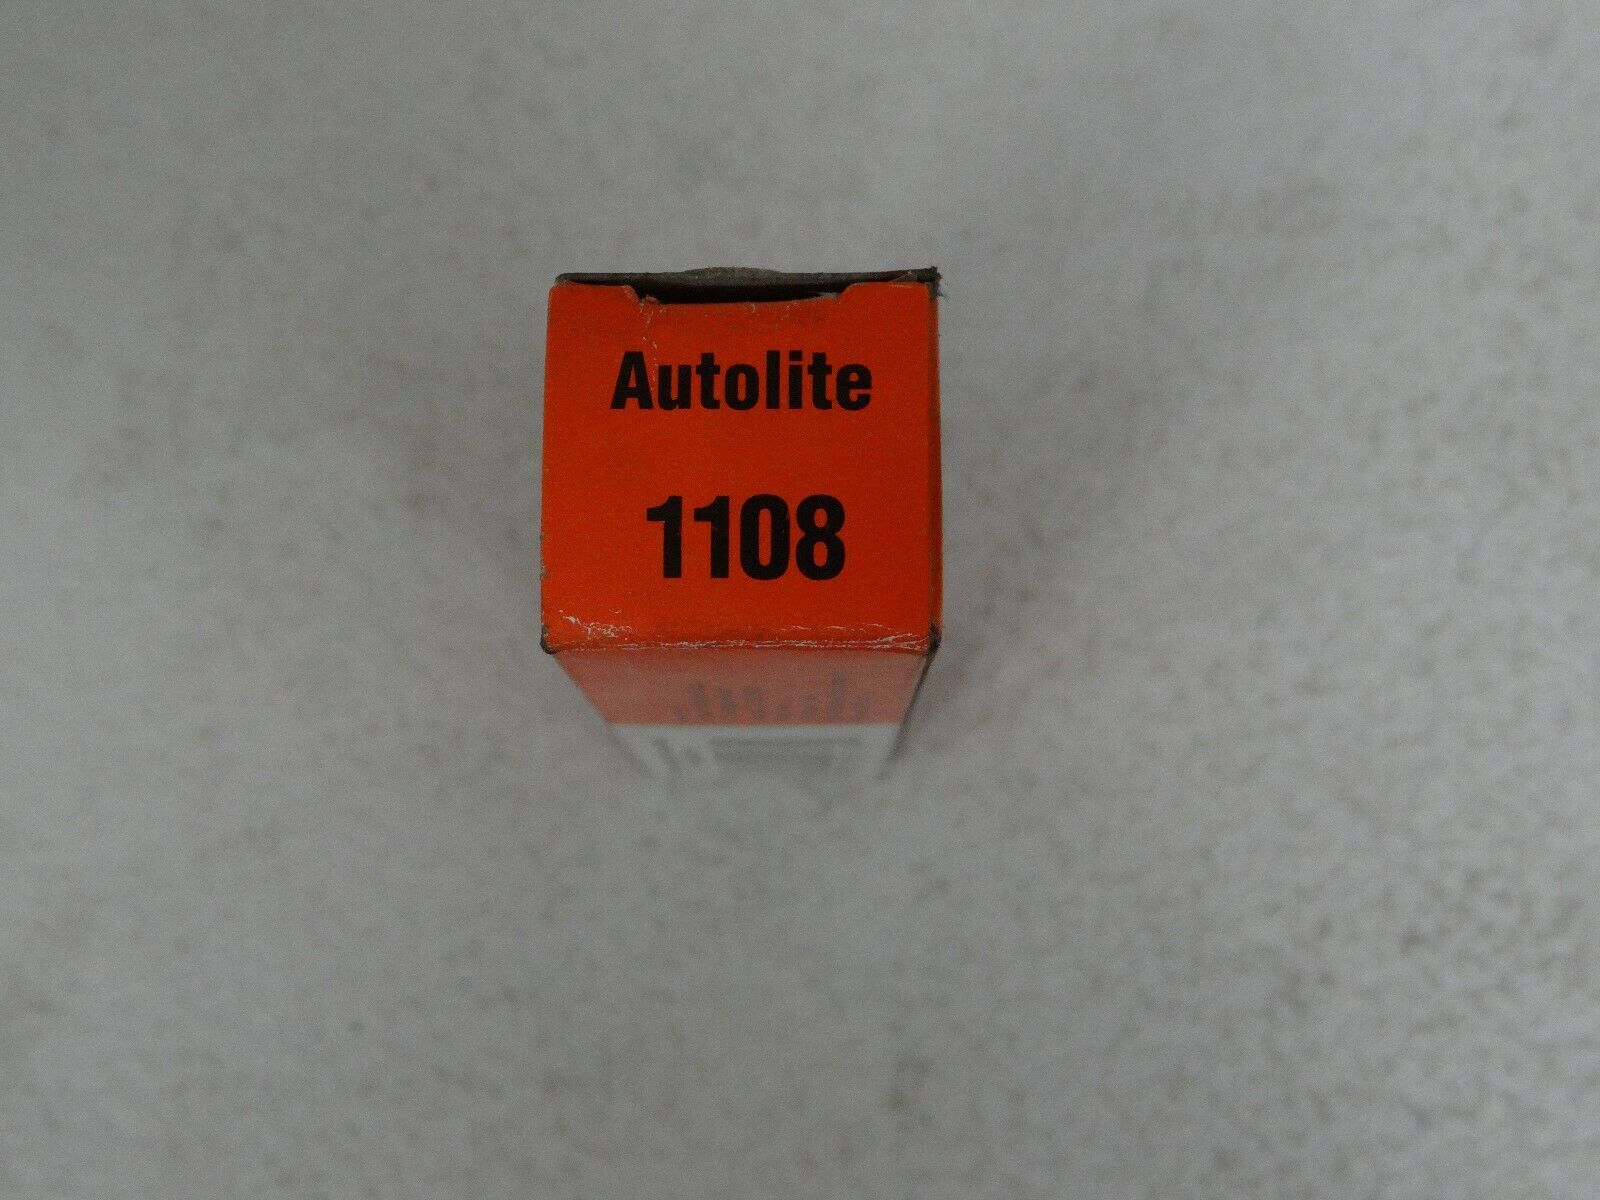 Autolite - P/N: 1108 Diesel Glow Plug New In Box NOS SOLD INDIVIDUALLY